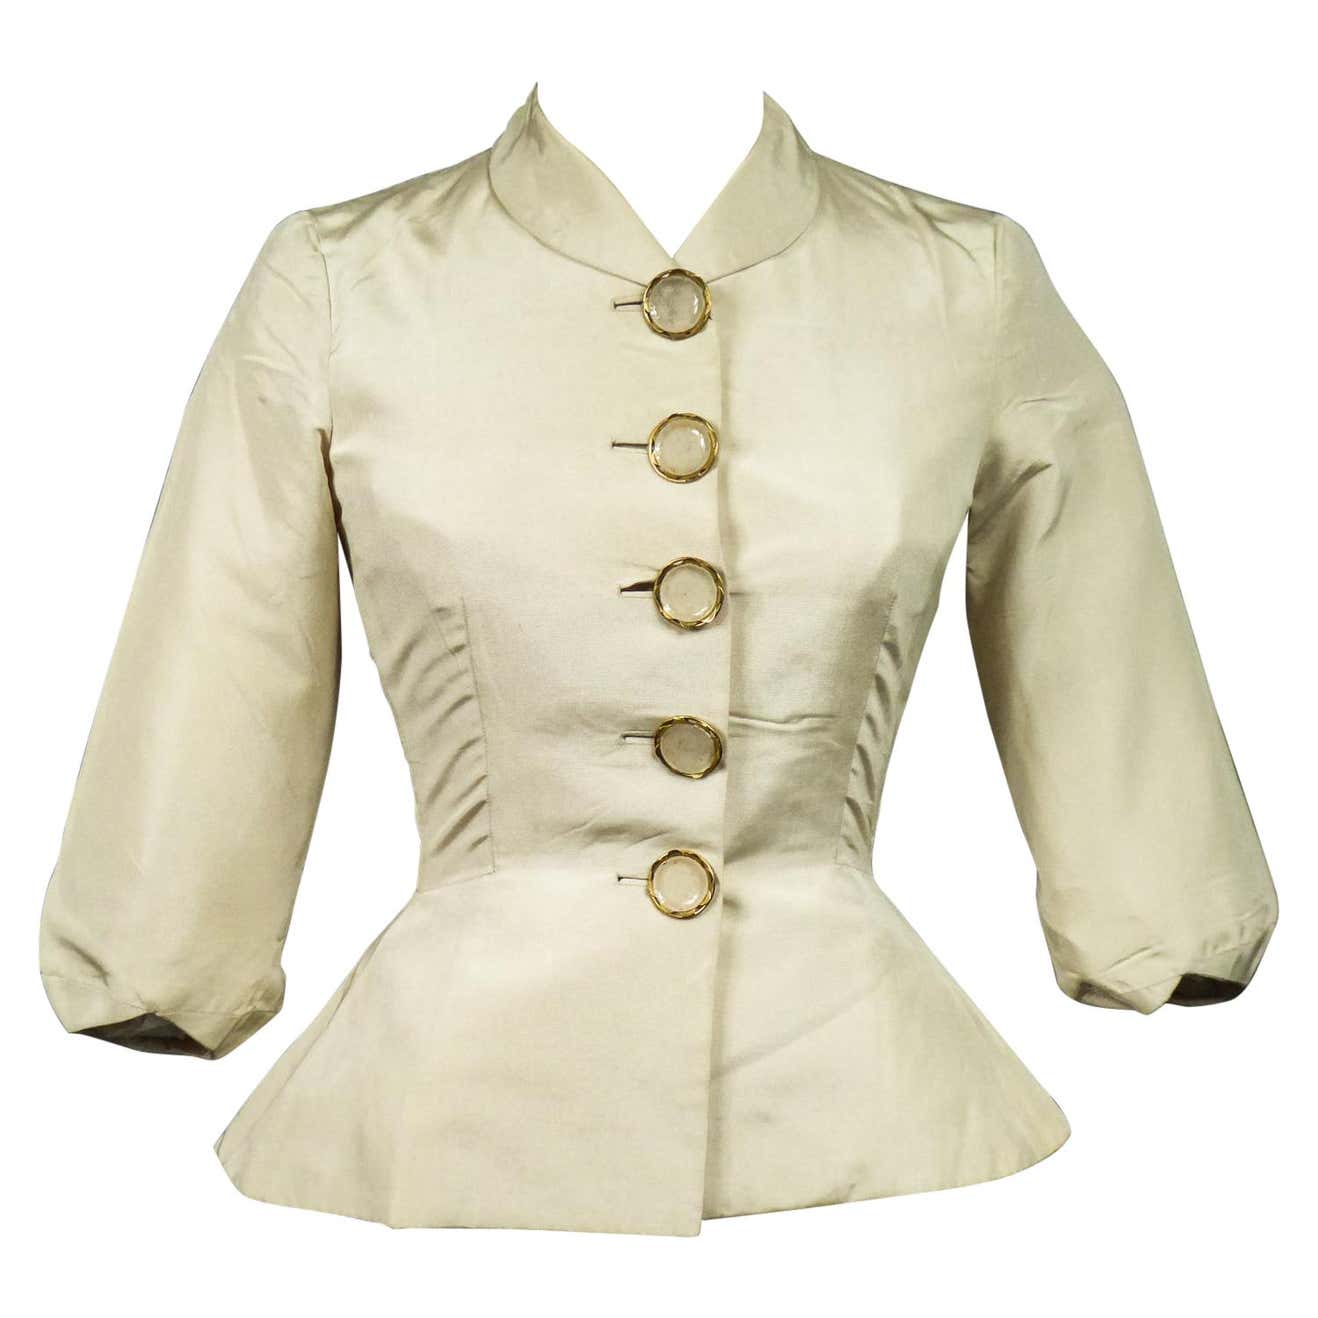 An Elsa Schiaparelli Bar Jacket in Cream Silk Numbered 89254 Circa 1947 ...